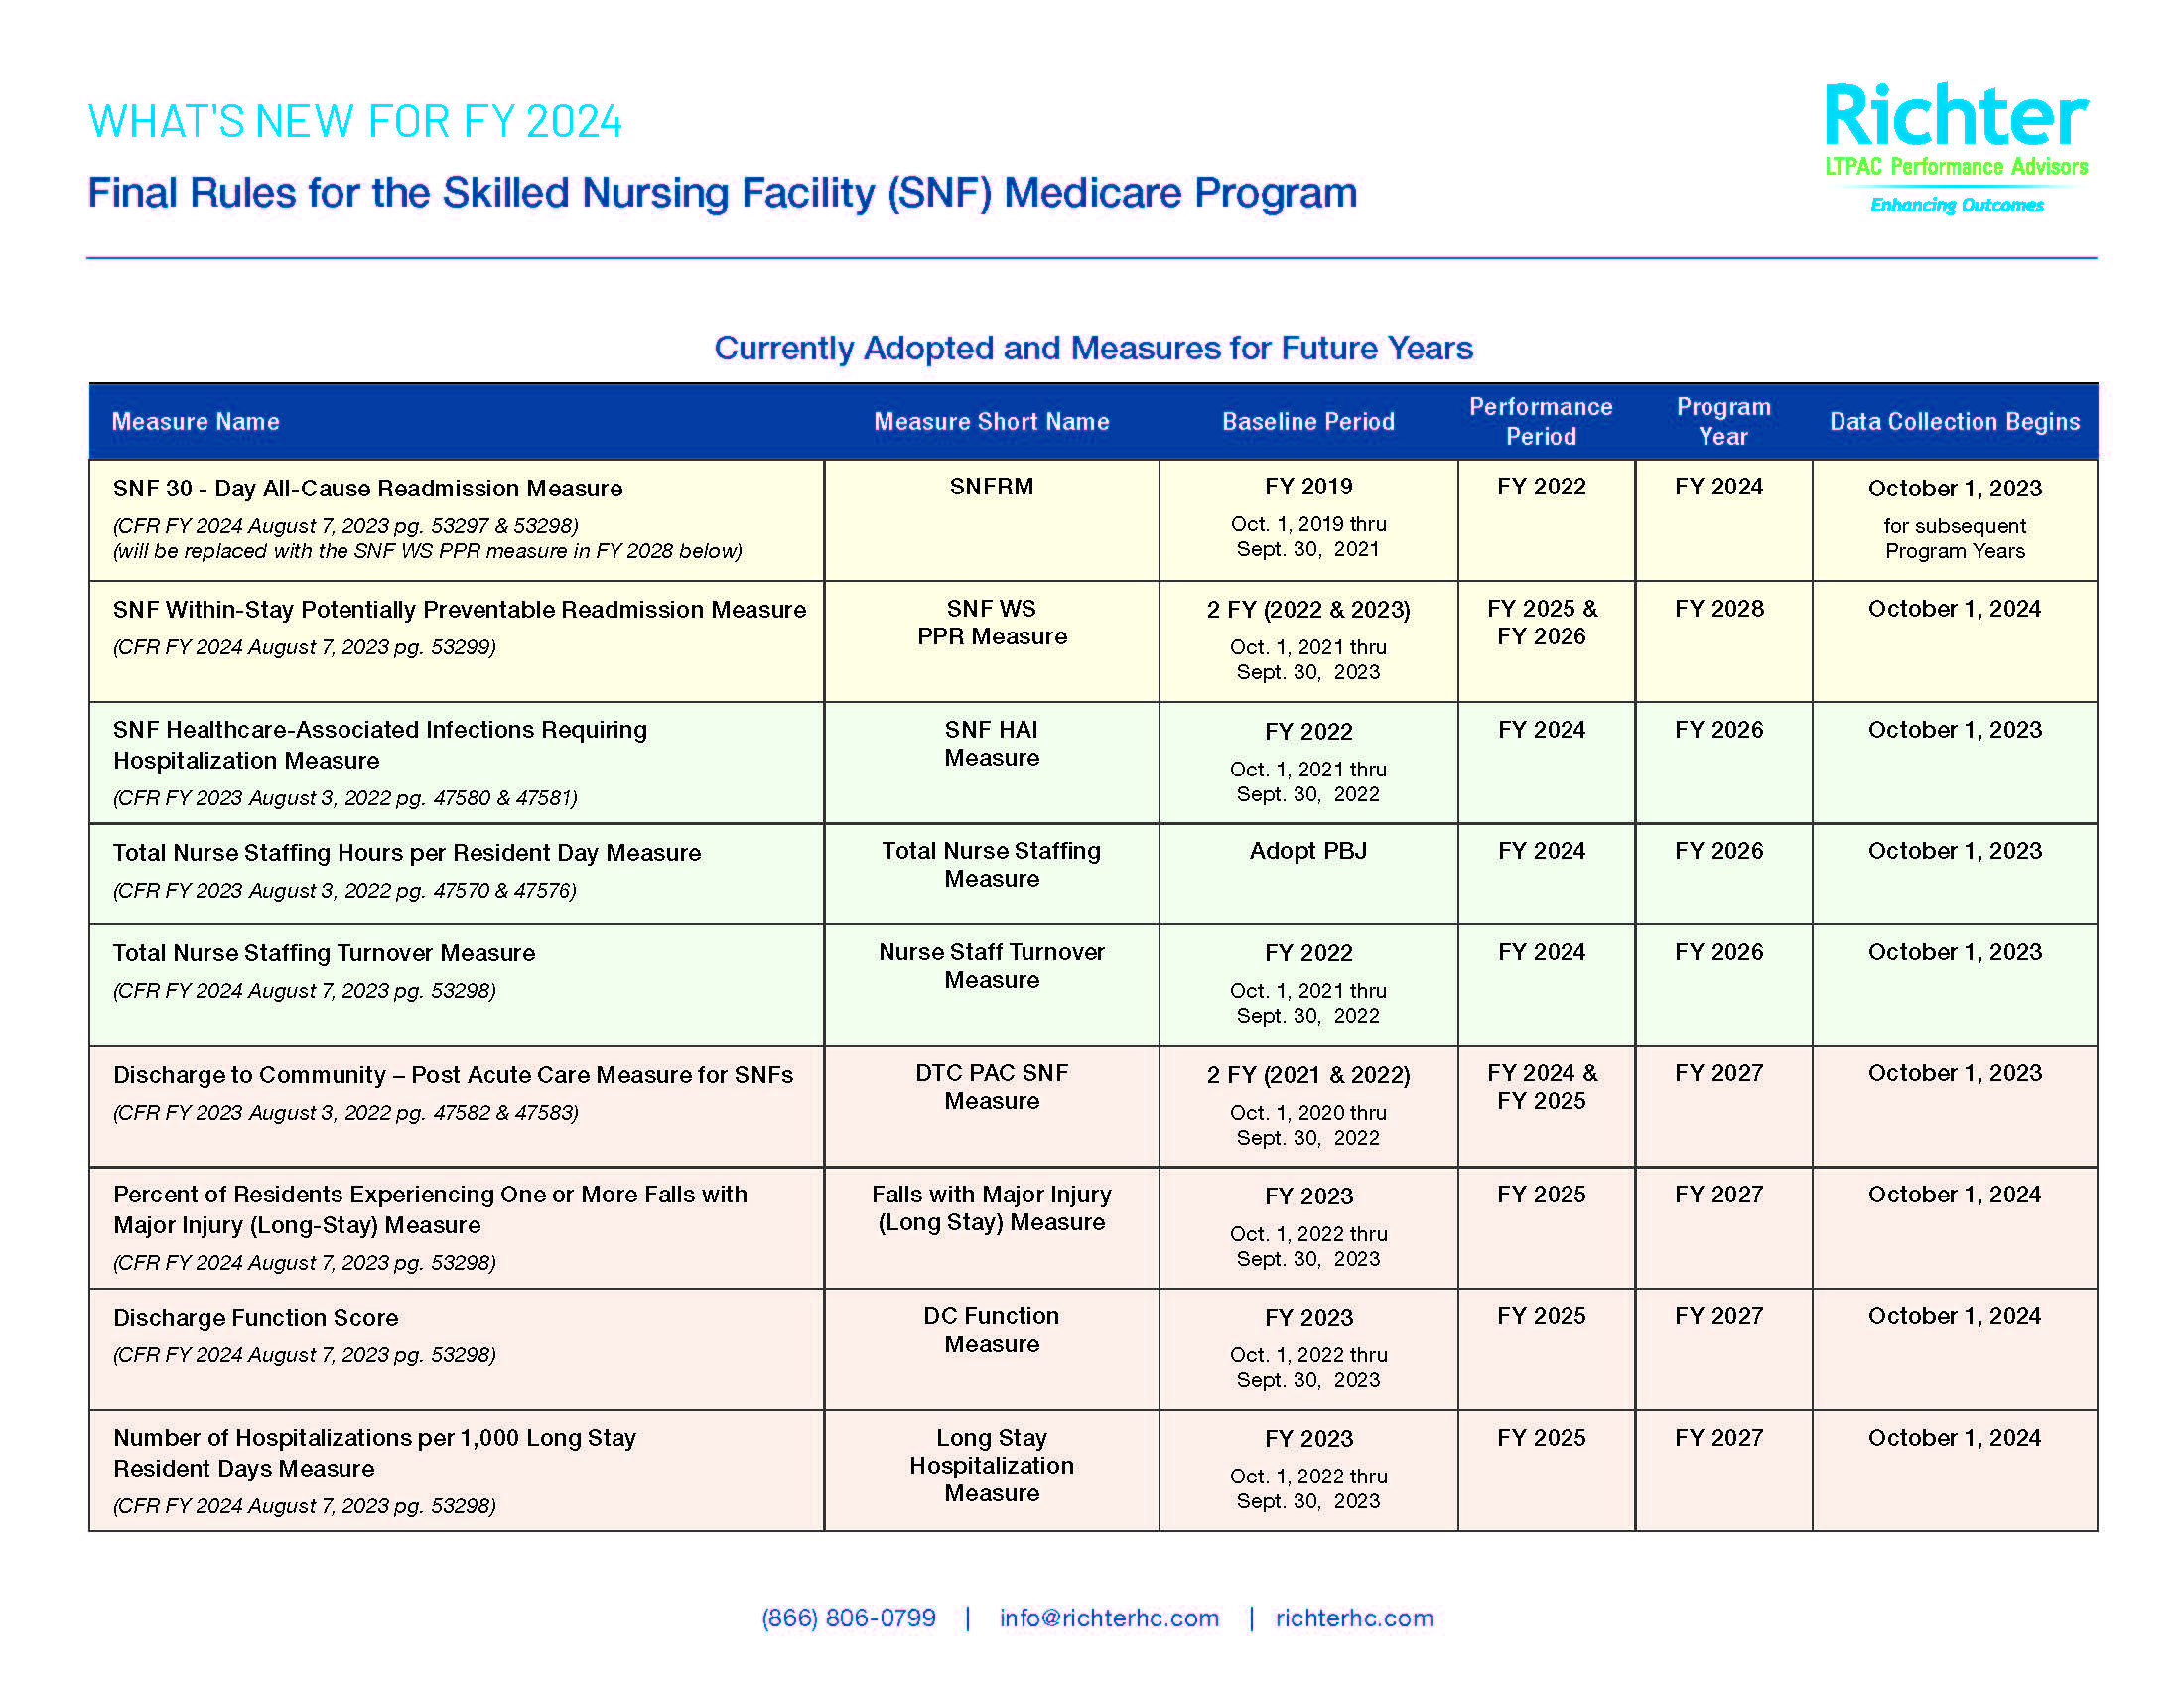 23RHC047_Richter_SNF-Medicare-Program-Chart_08.23_V1 (1)